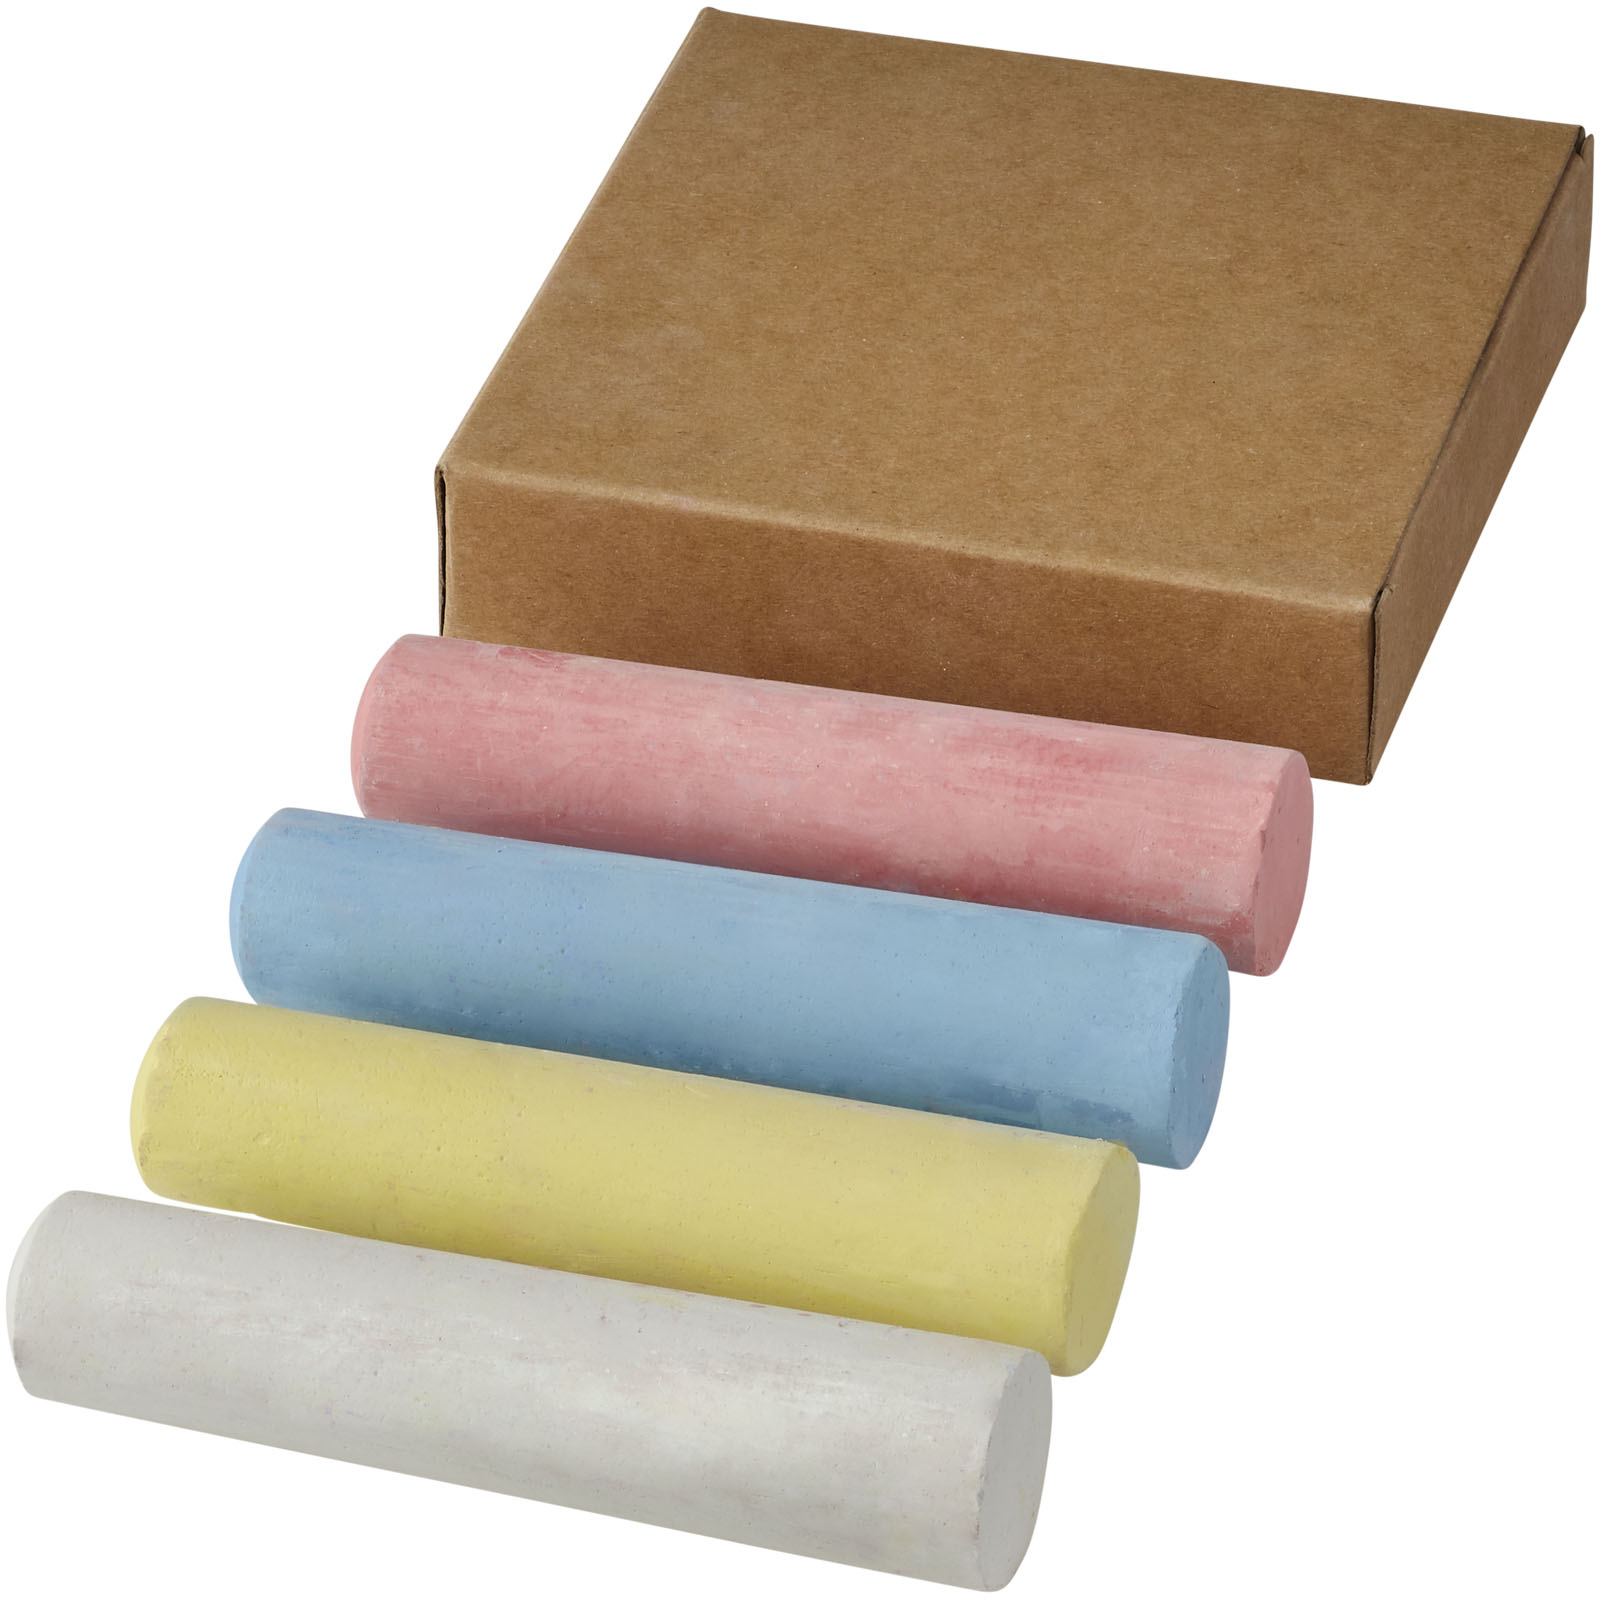 Coloured Chalk Set in Paper Box - Kegworth